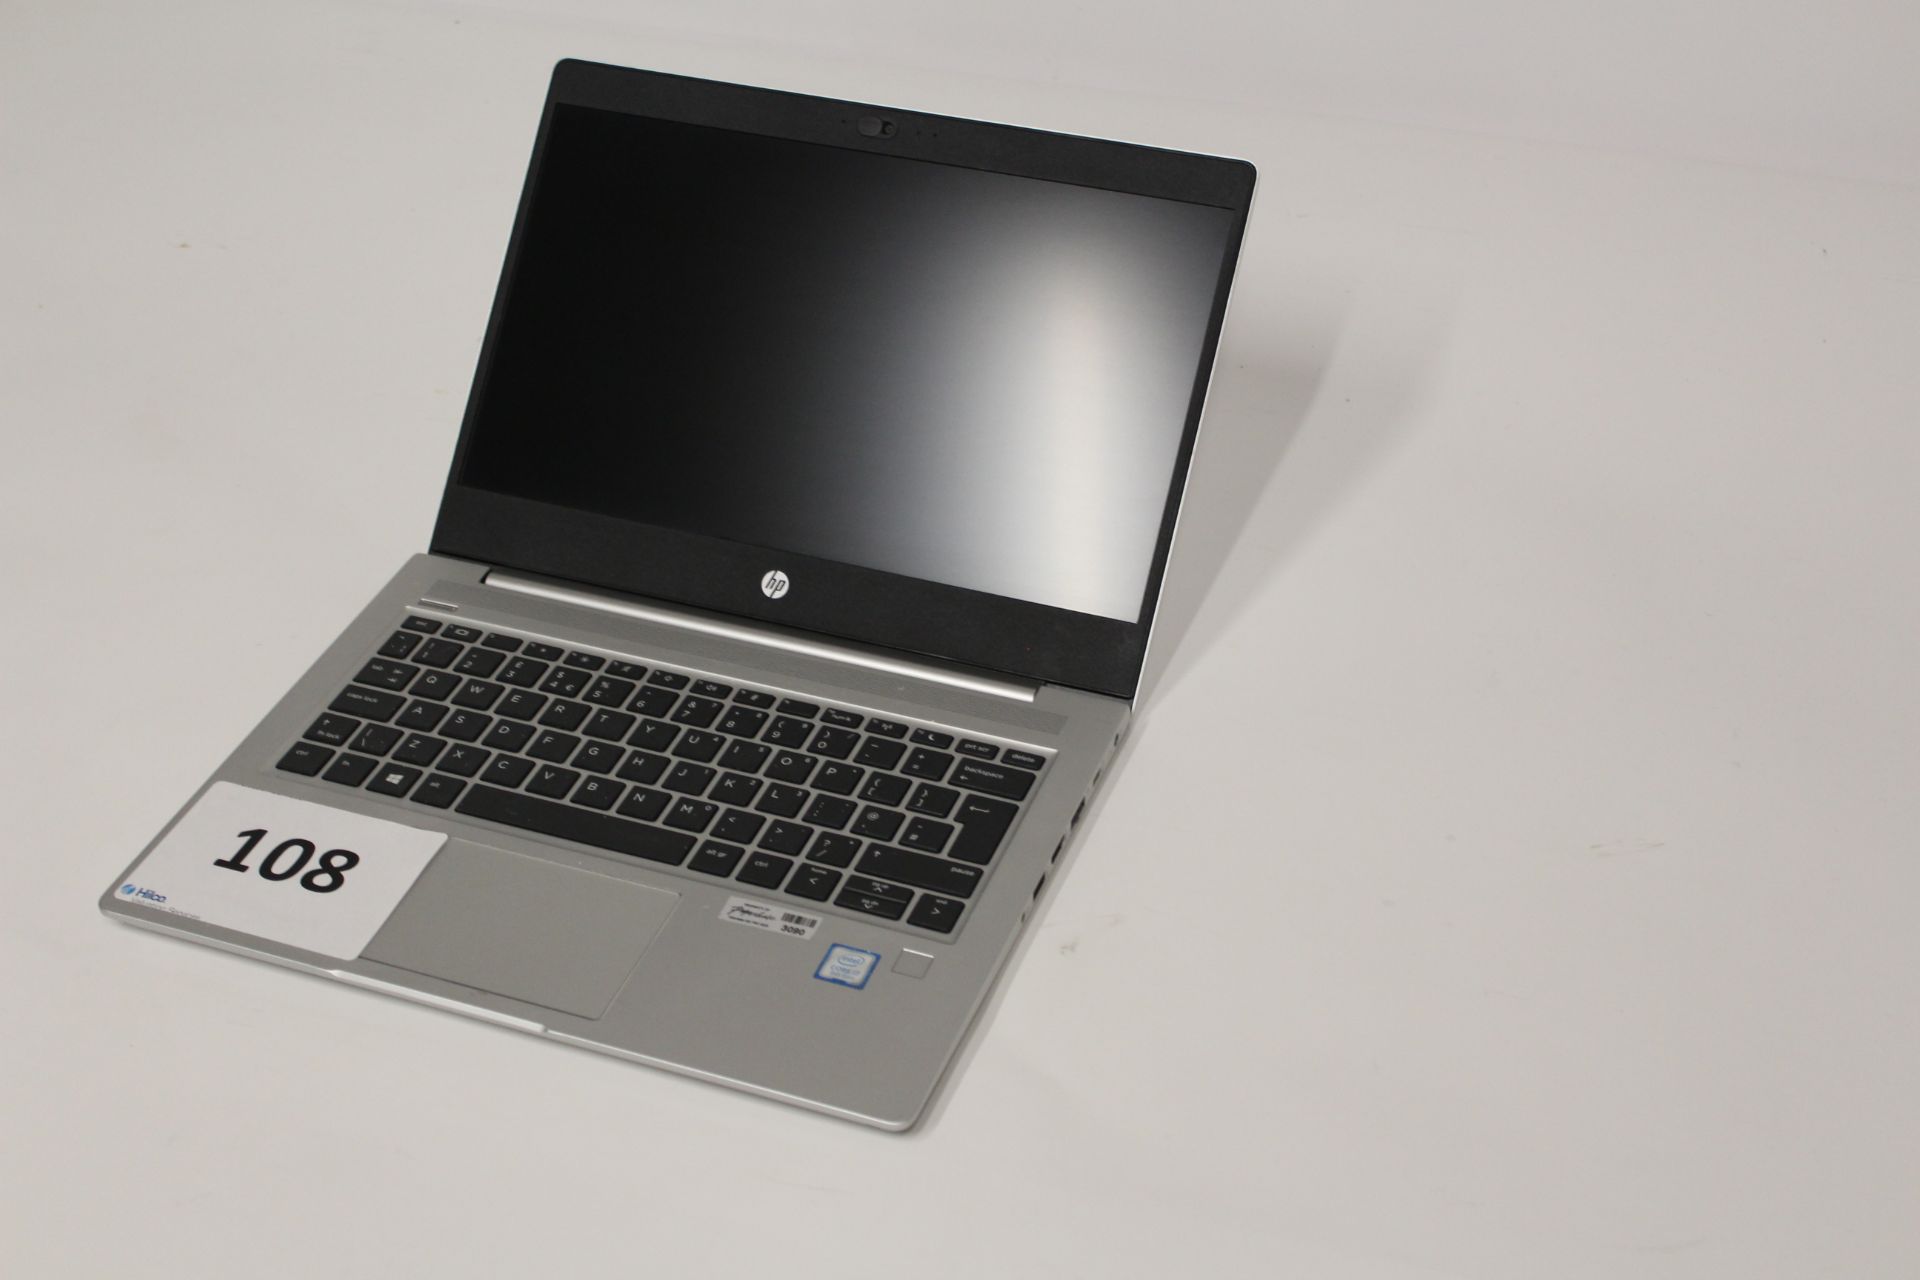 HP Probook 430 G6 Core i7 8th Generation Laptop Computer S/N 5CD0117R5L. No charger